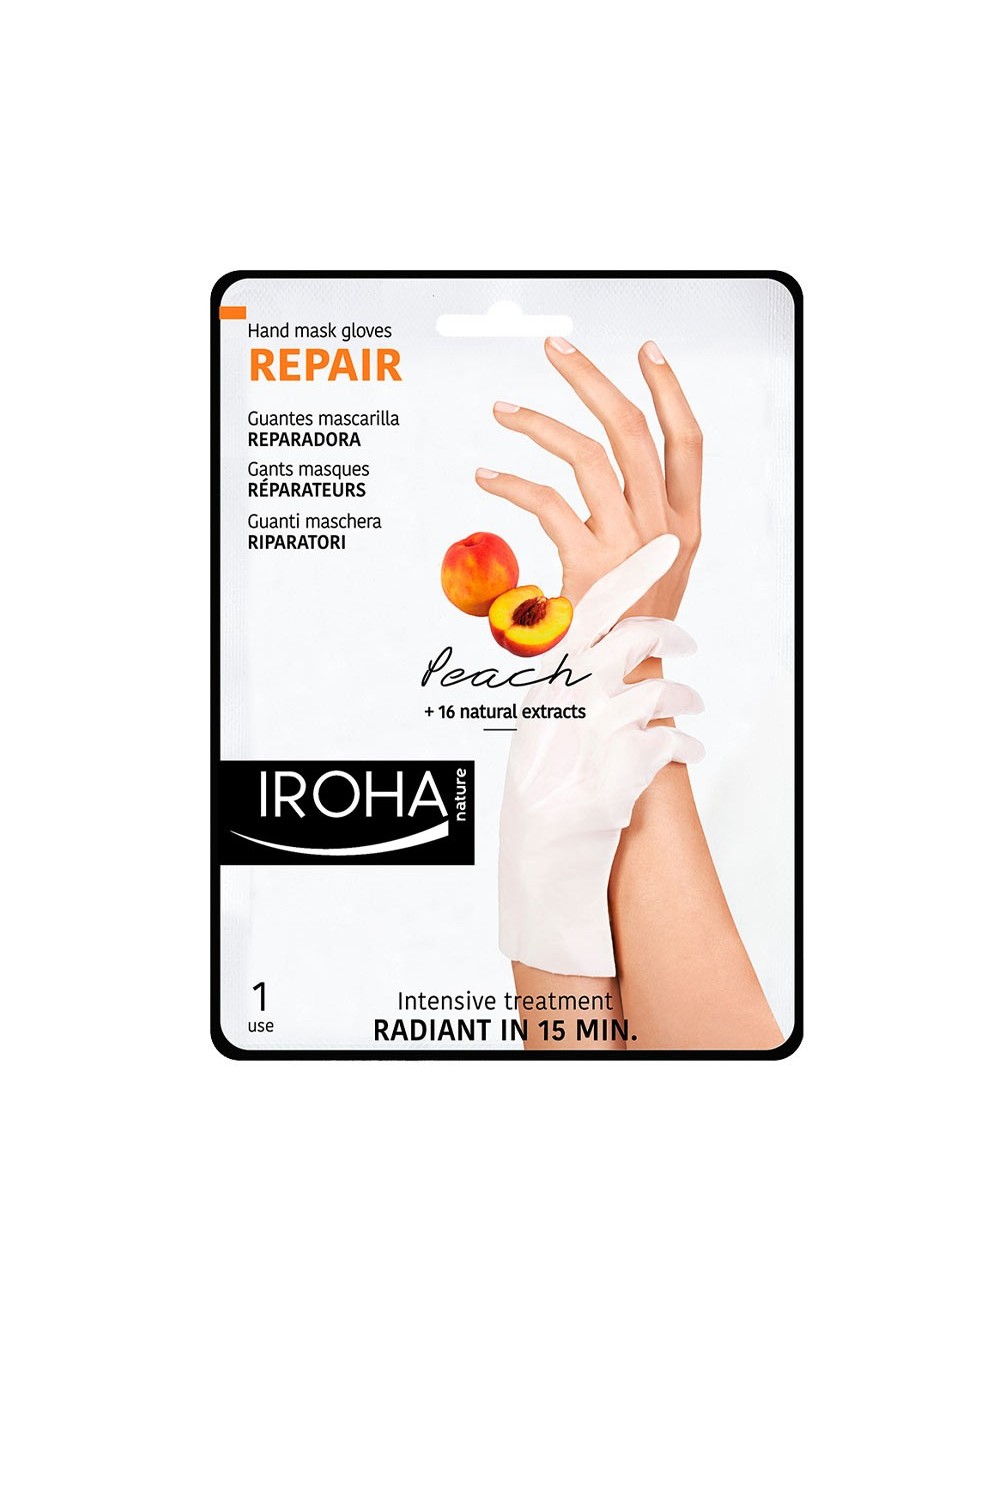 Iroha Nature Peach Hand y Nail Mask Gloves Repair